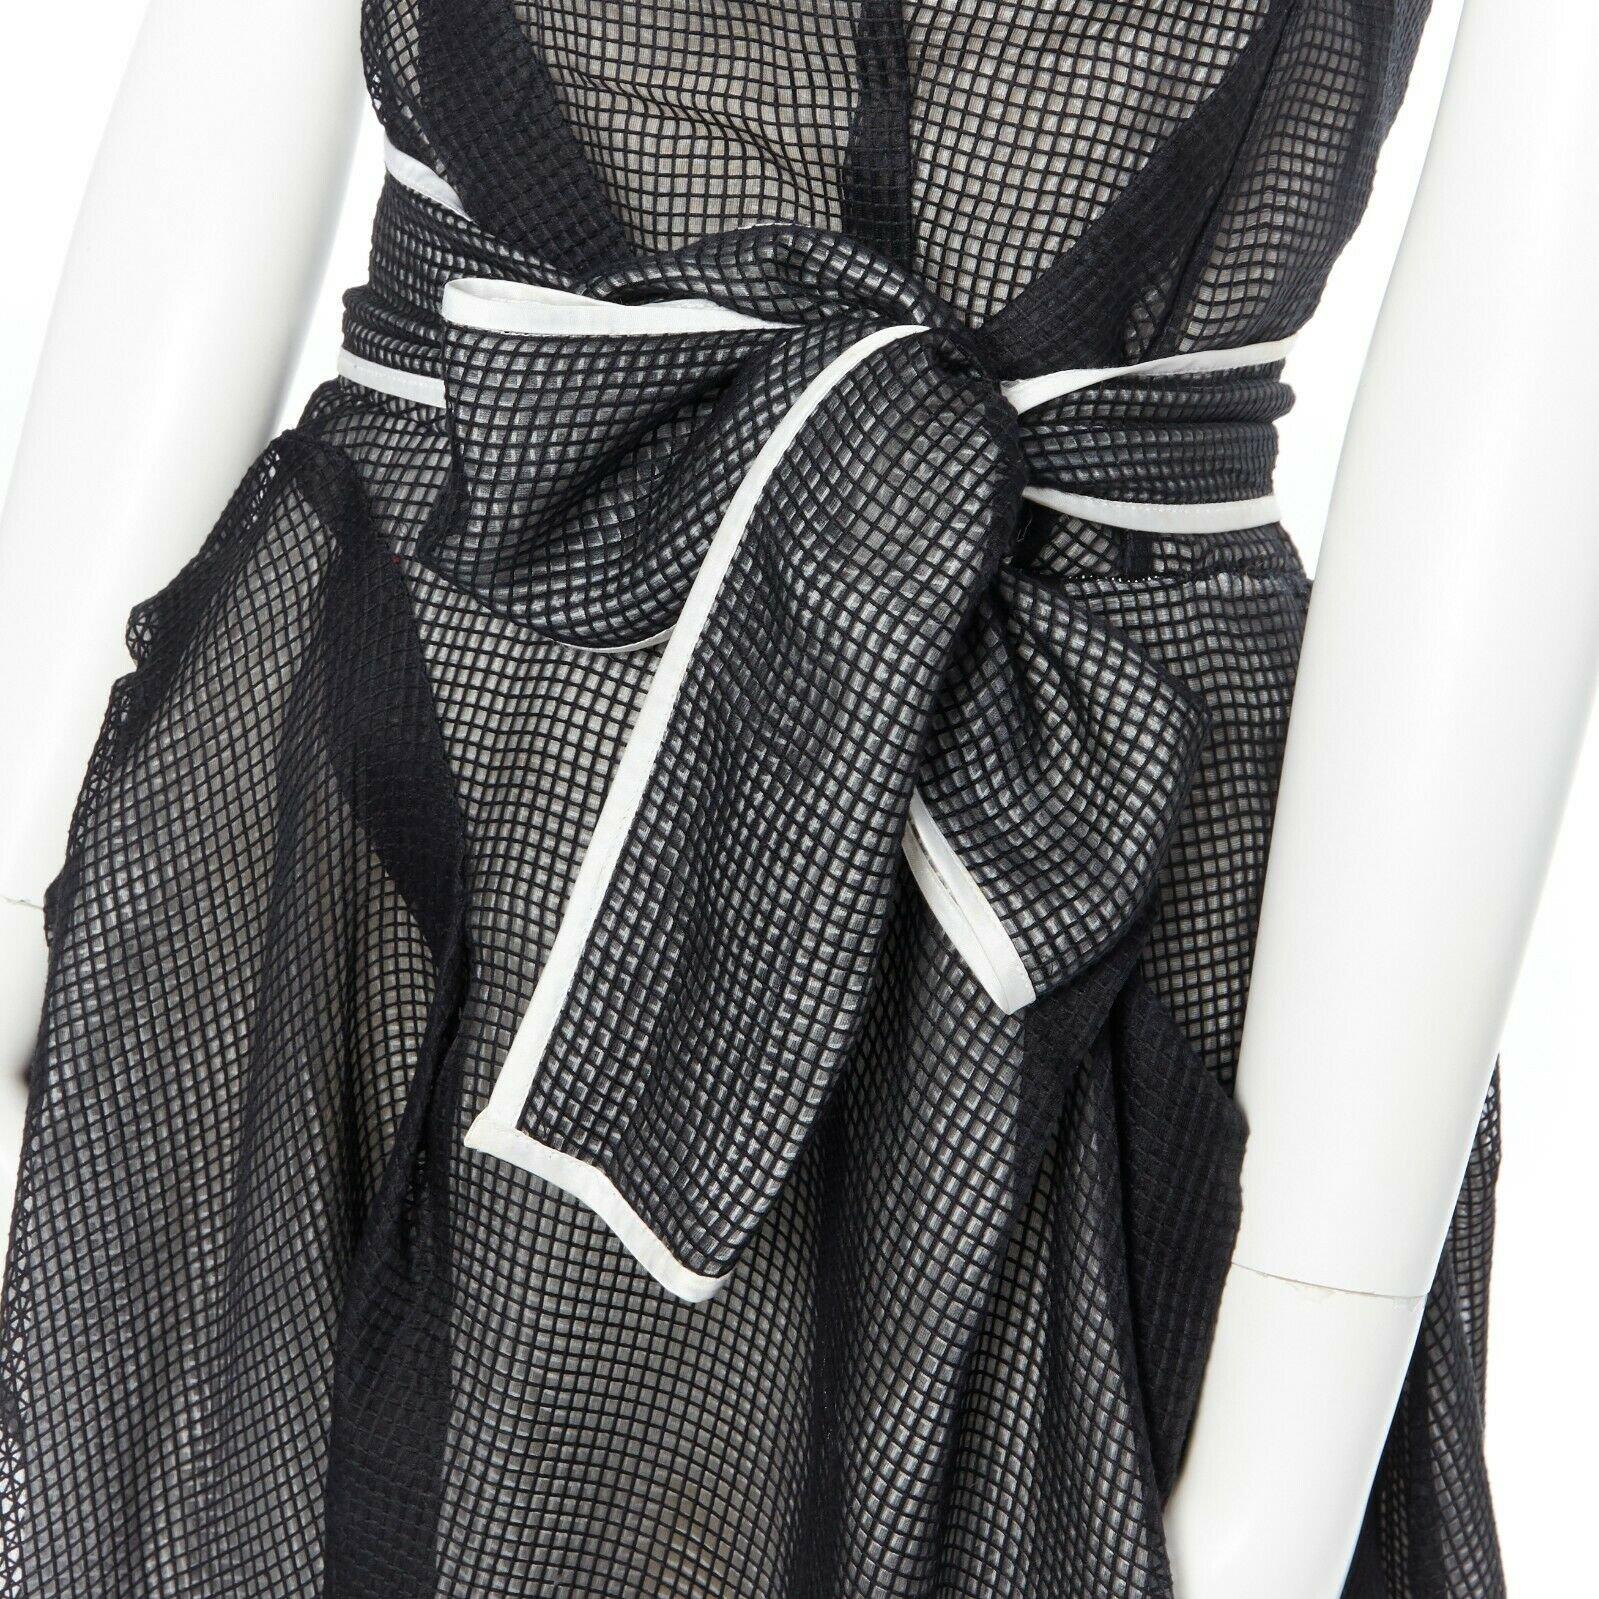 MATICEVSKI black net organza demi-couture a-line evening ballgown drape ruche L 4